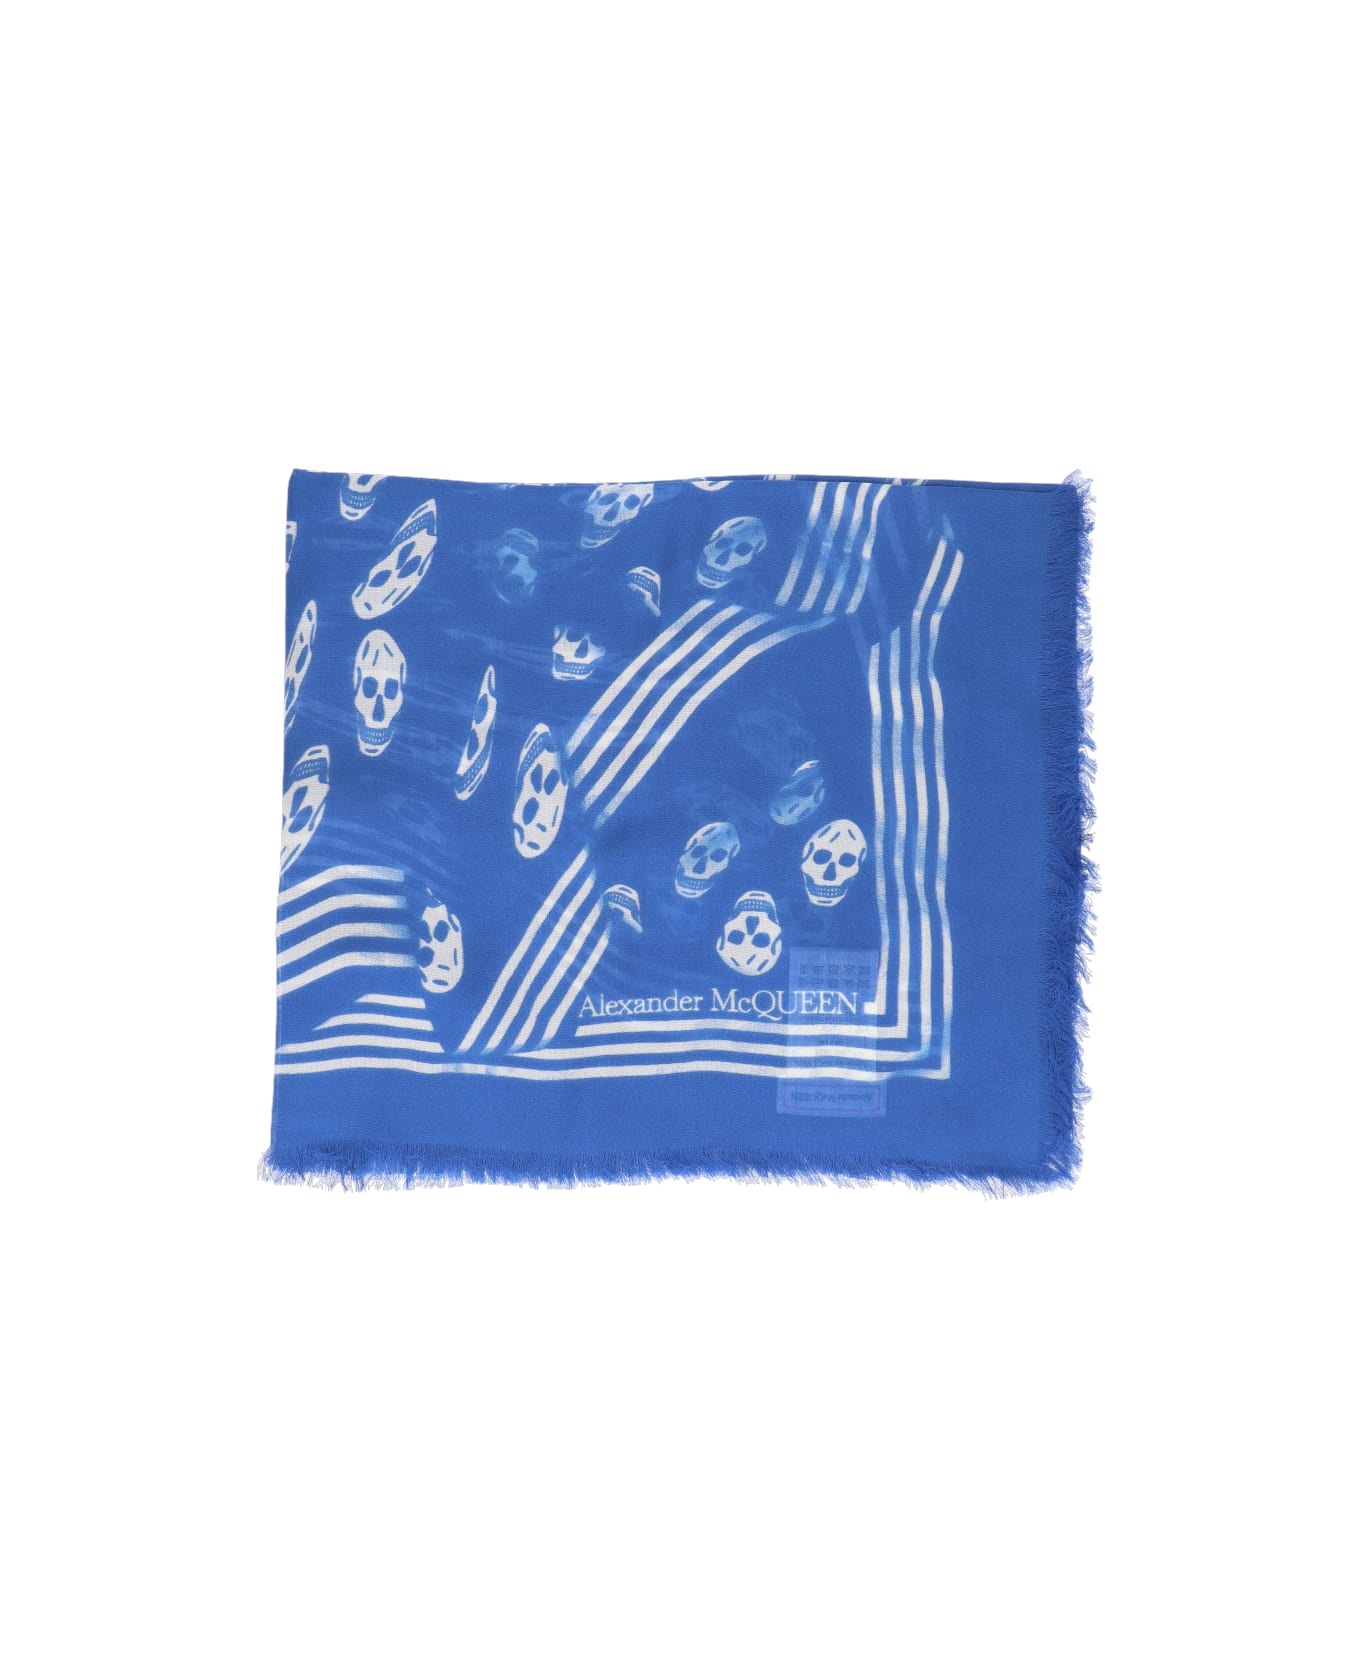 Alexander McQueen Skull Print Scarf - Blue